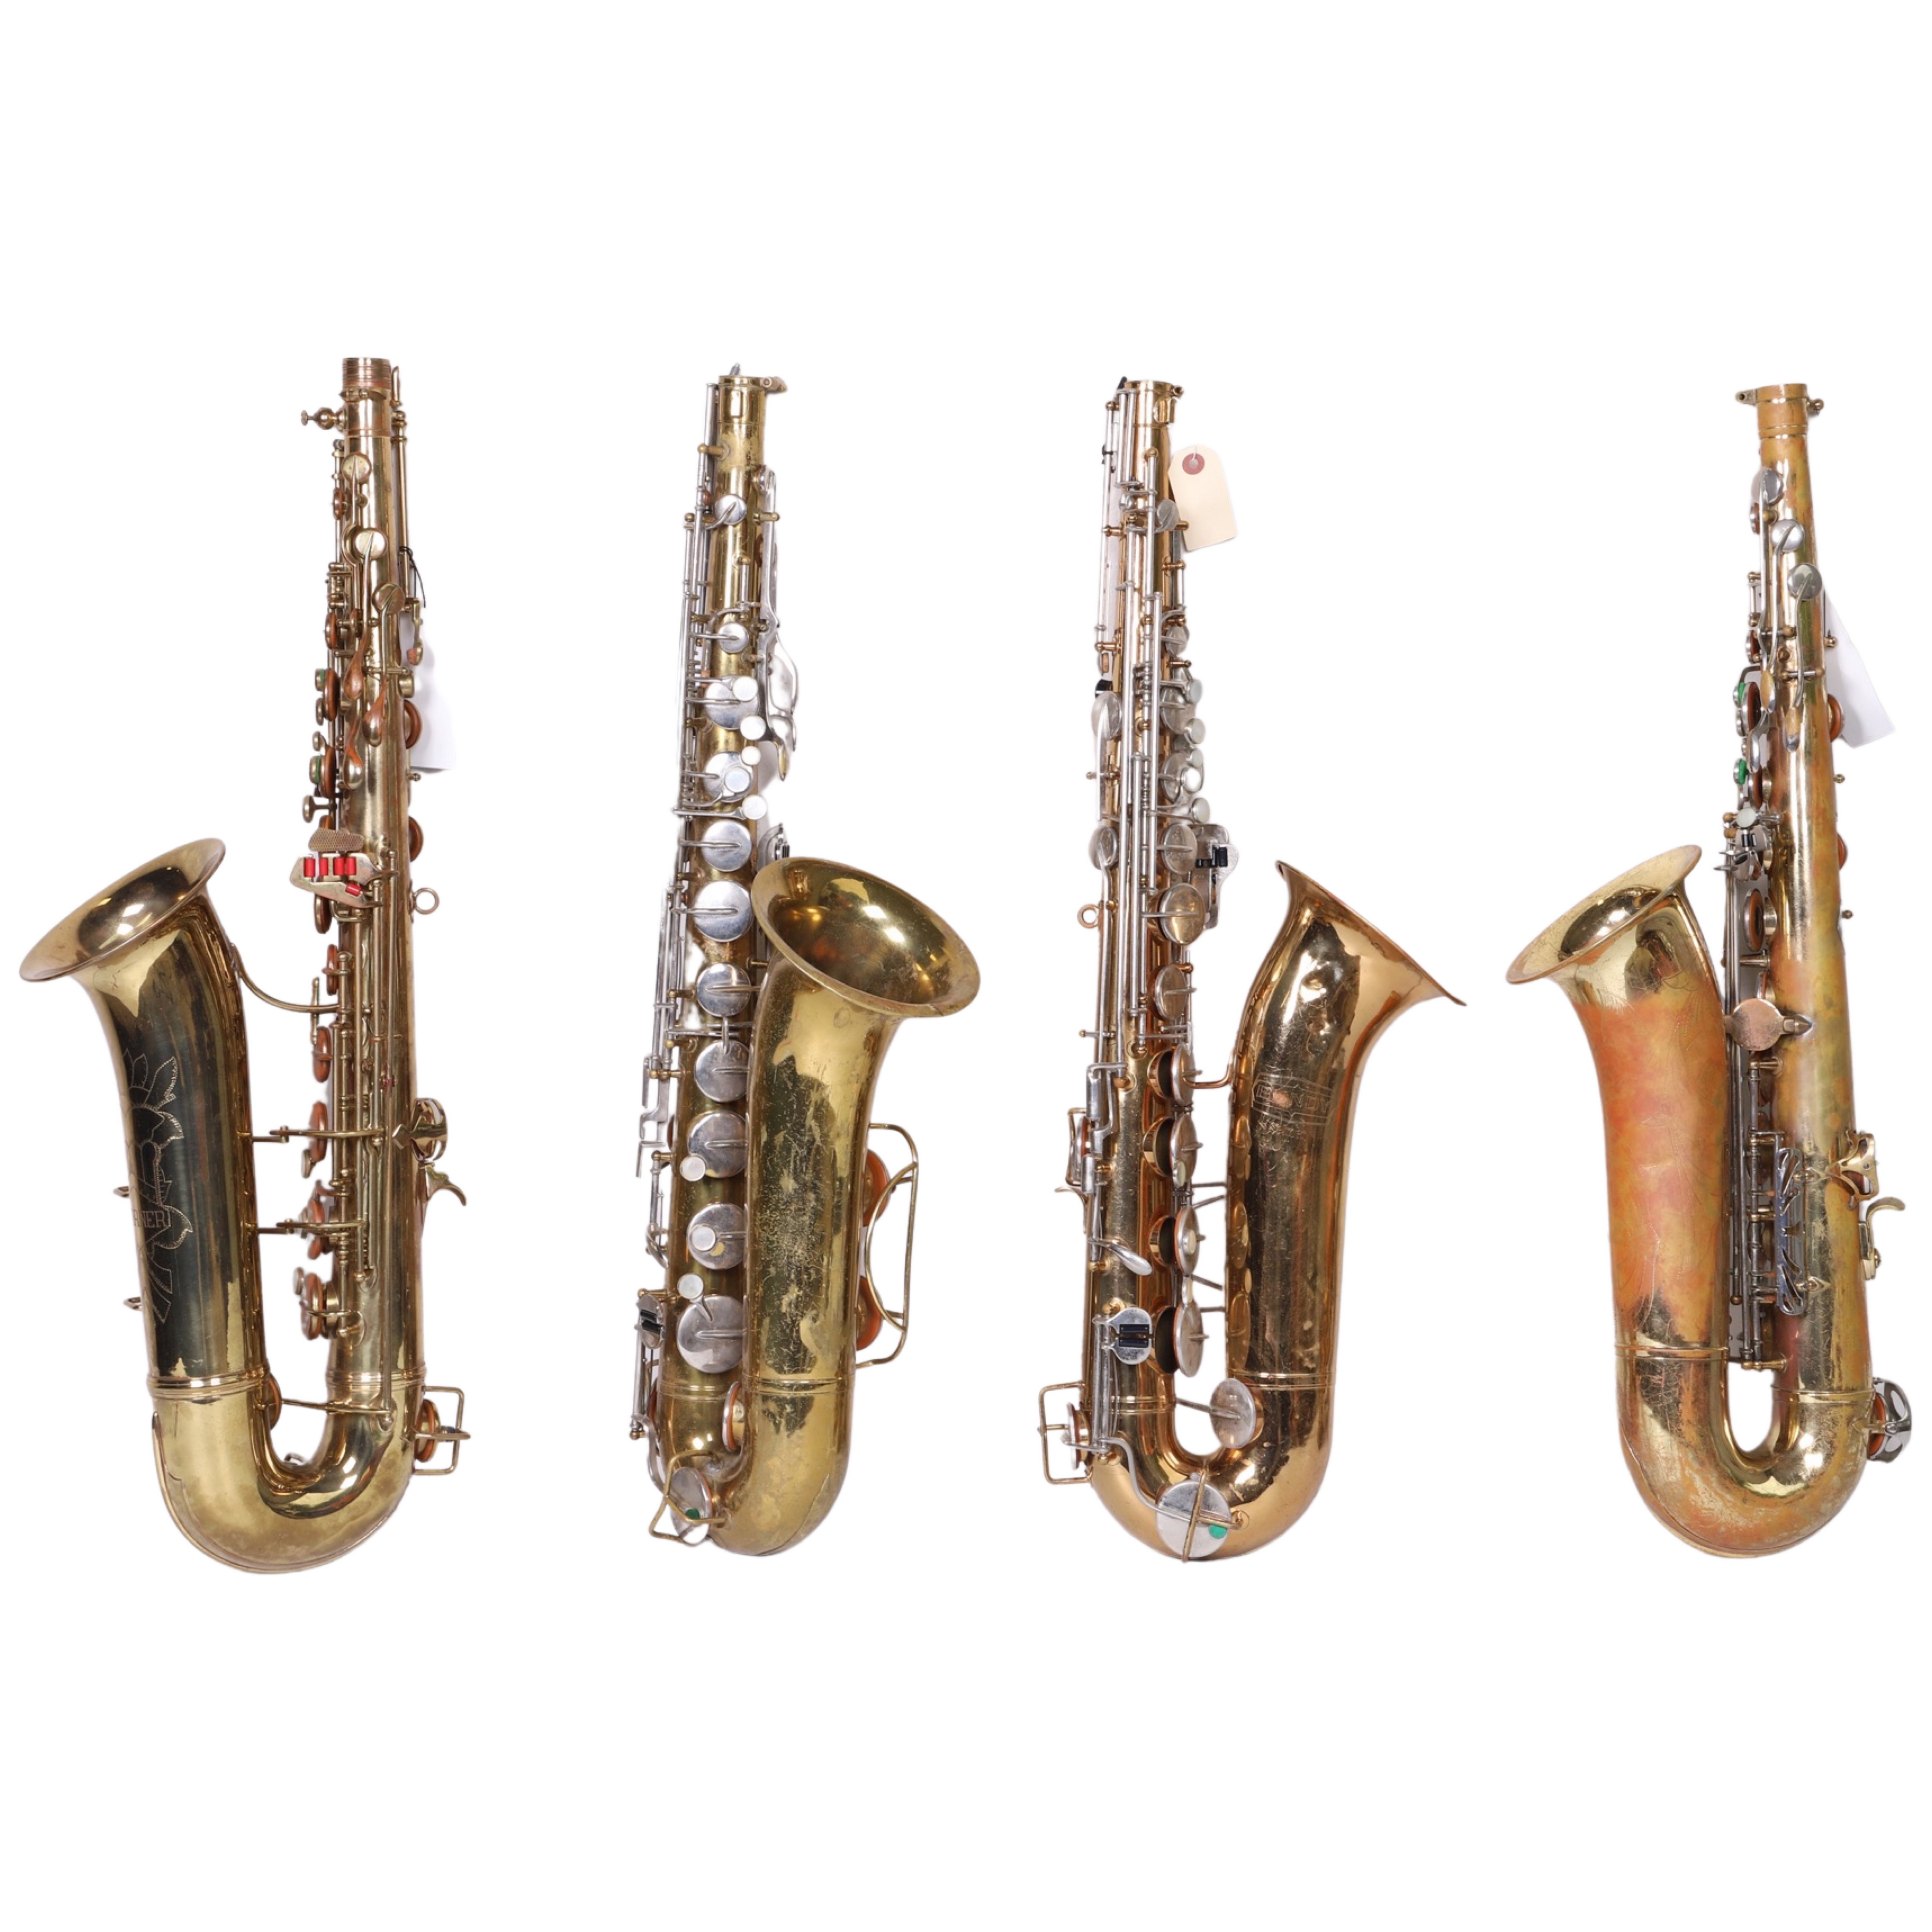 (4) Tenor saxophones, for parts